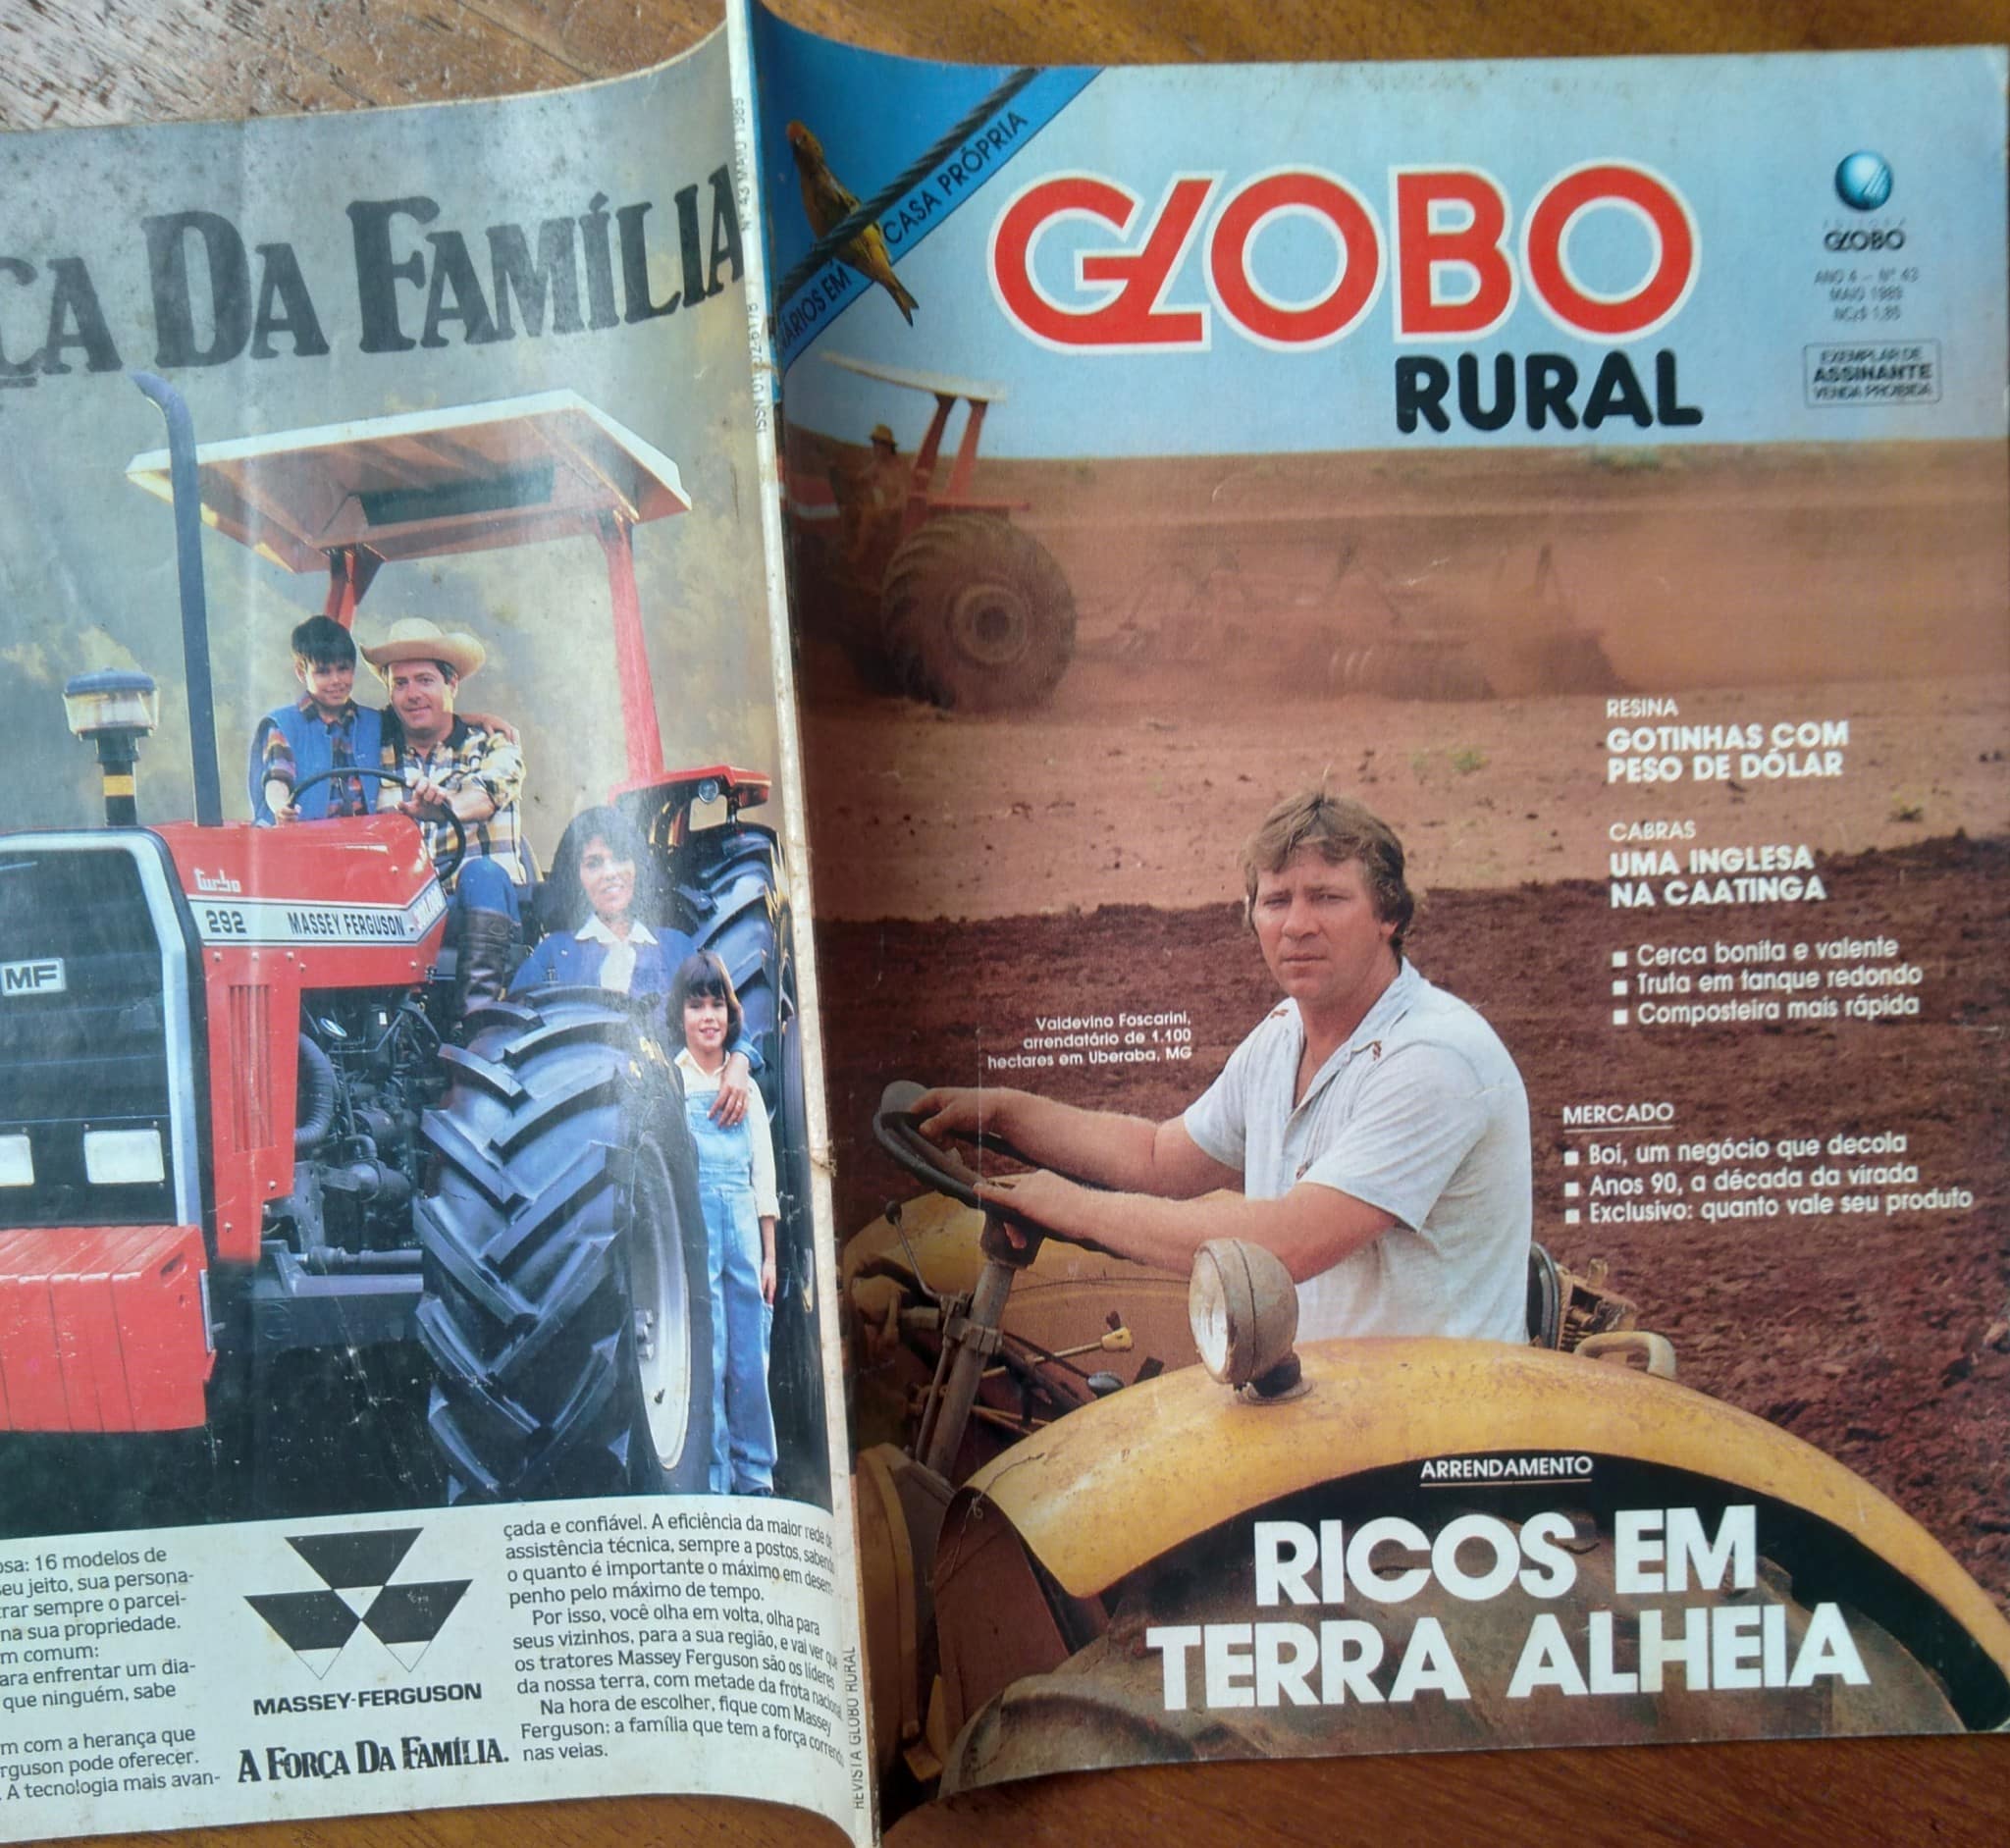 AgRural  Globo Rural